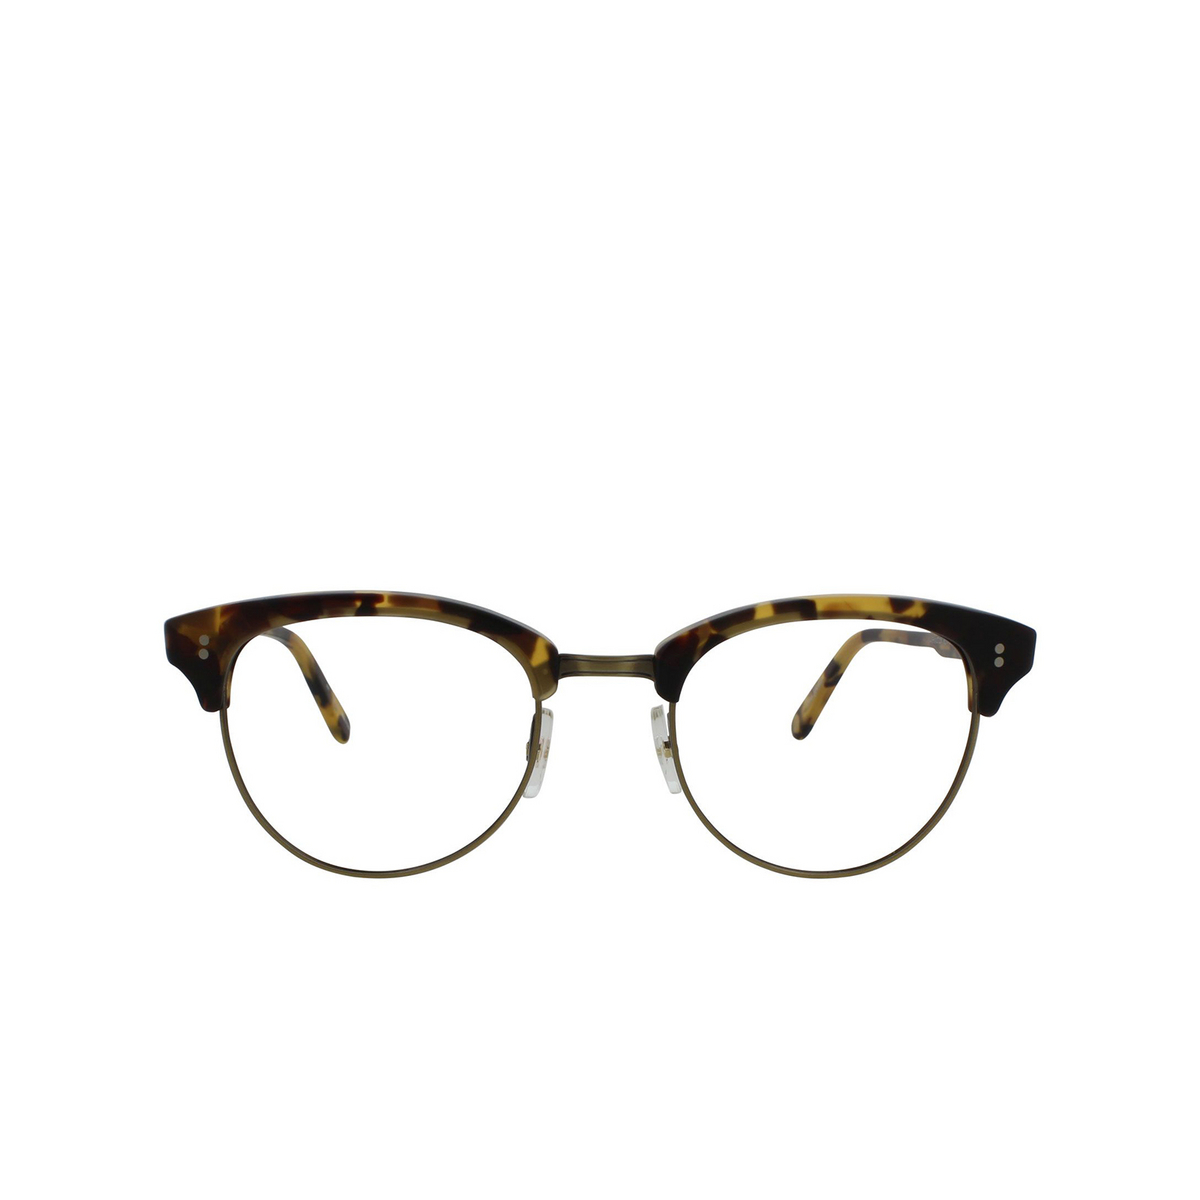 Garrett Leight WASHINGTON Eyeglasses MDK-AG Matte Dark Tortoise-Antique Gold - front view